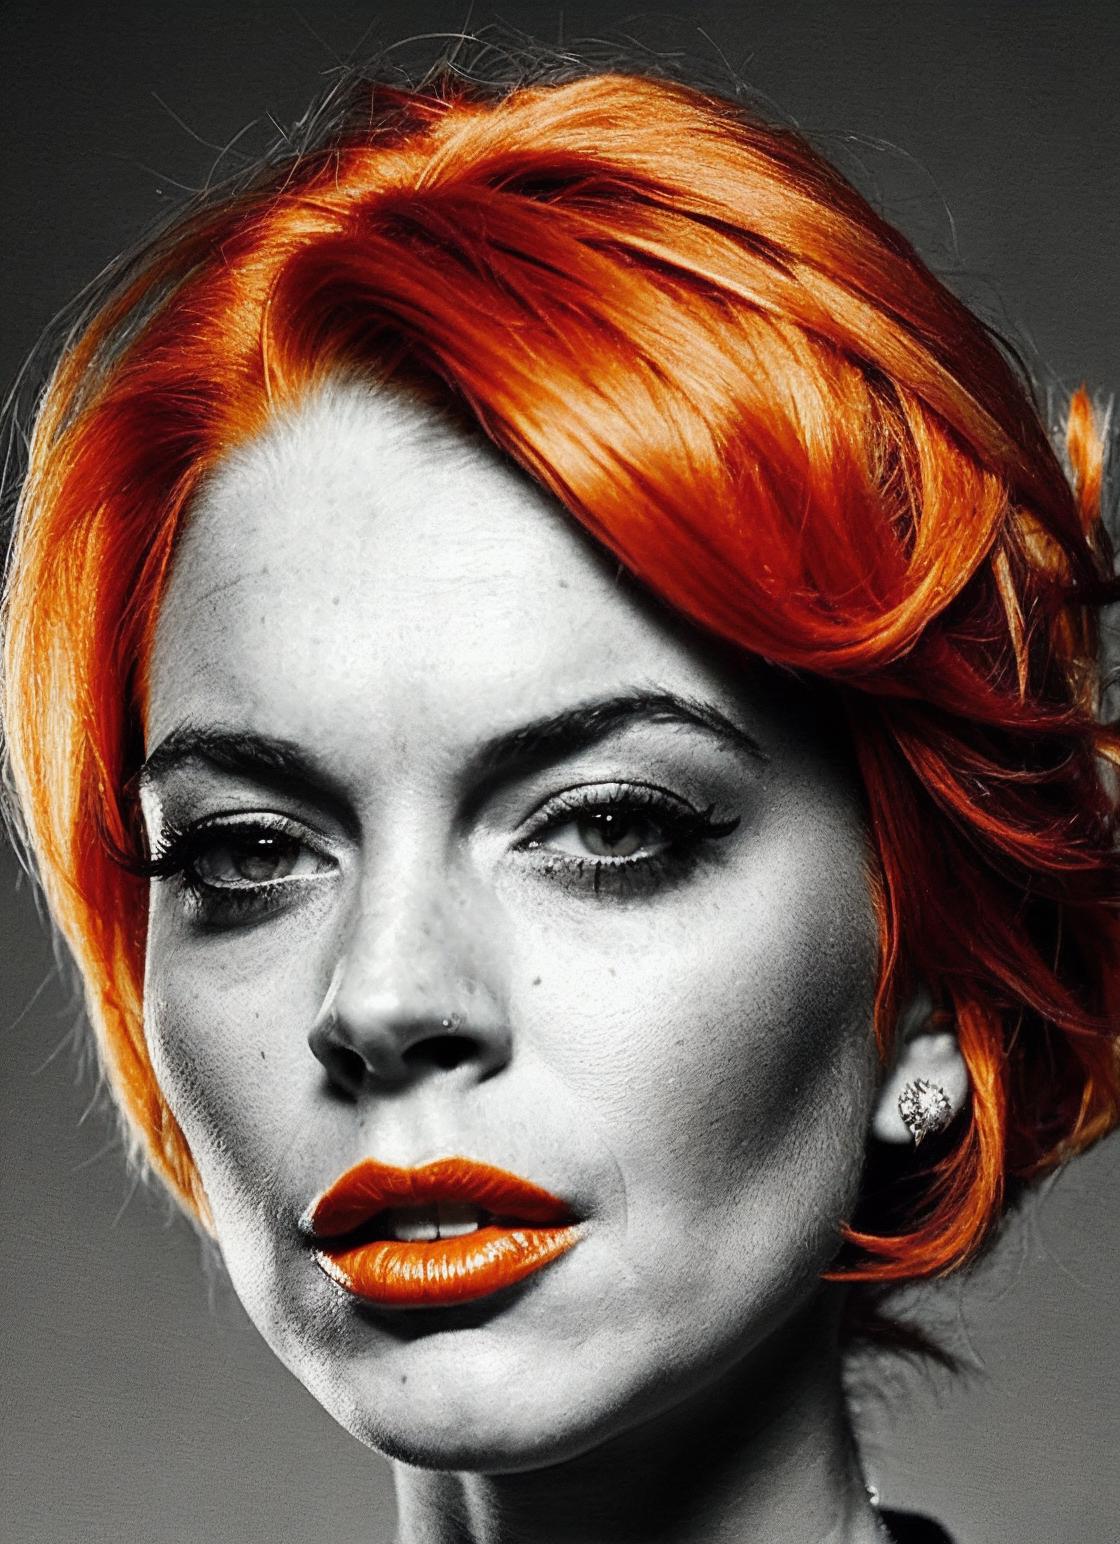 Lindsay Lohan image by malcolmrey